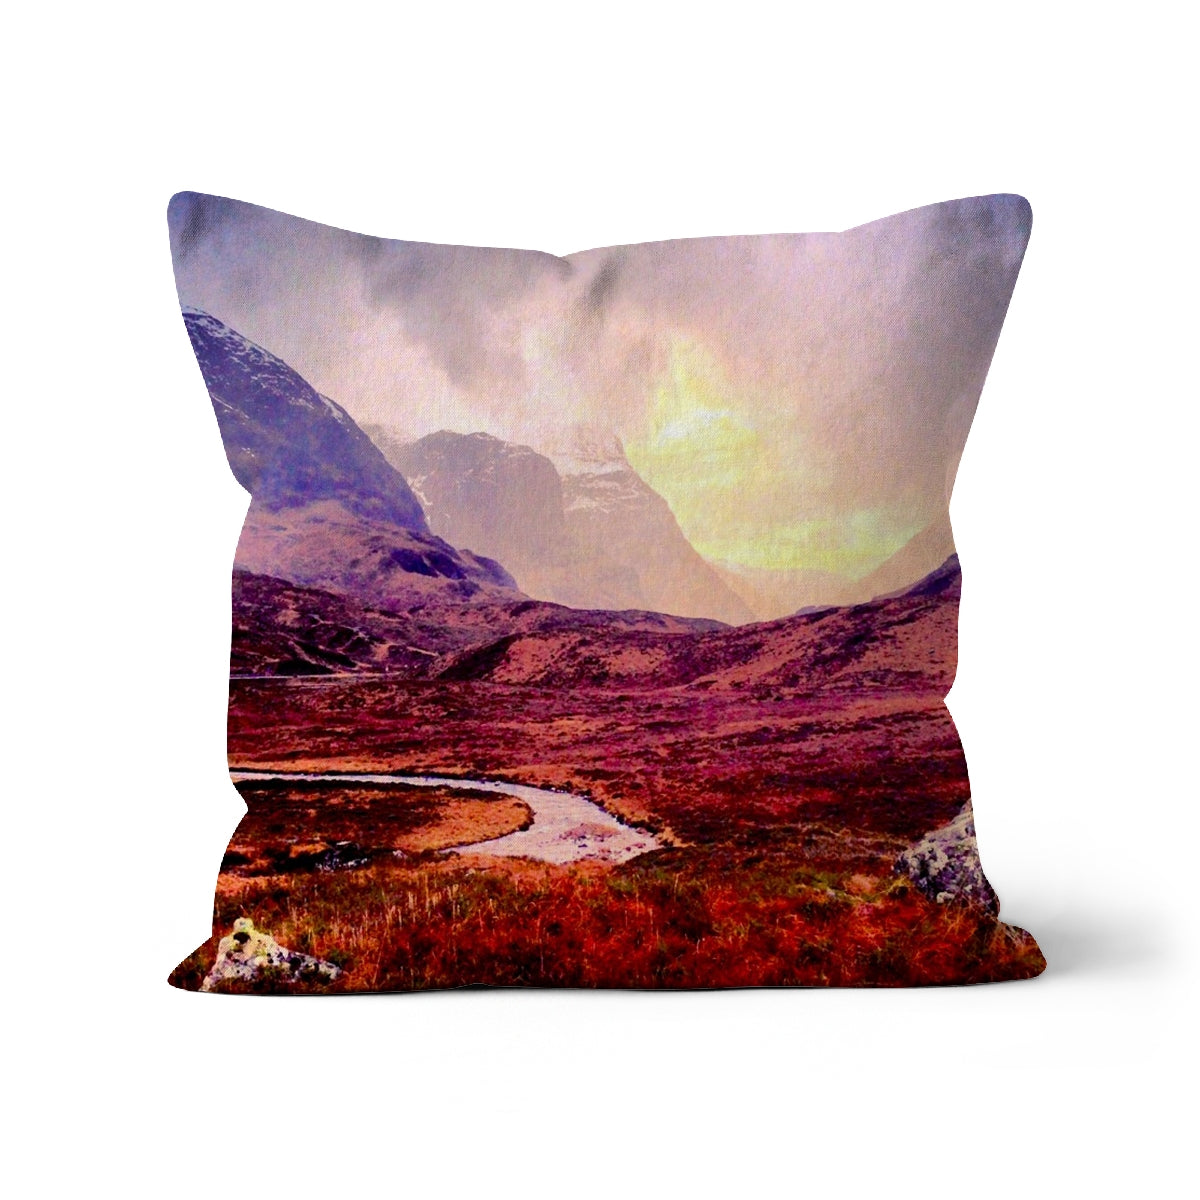 A Brooding Glencoe Art Gifts Cushion-Cushions-Glencoe Art Gallery-Canvas-16"x16"-Paintings, Prints, Homeware, Art Gifts From Scotland By Scottish Artist Kevin Hunter